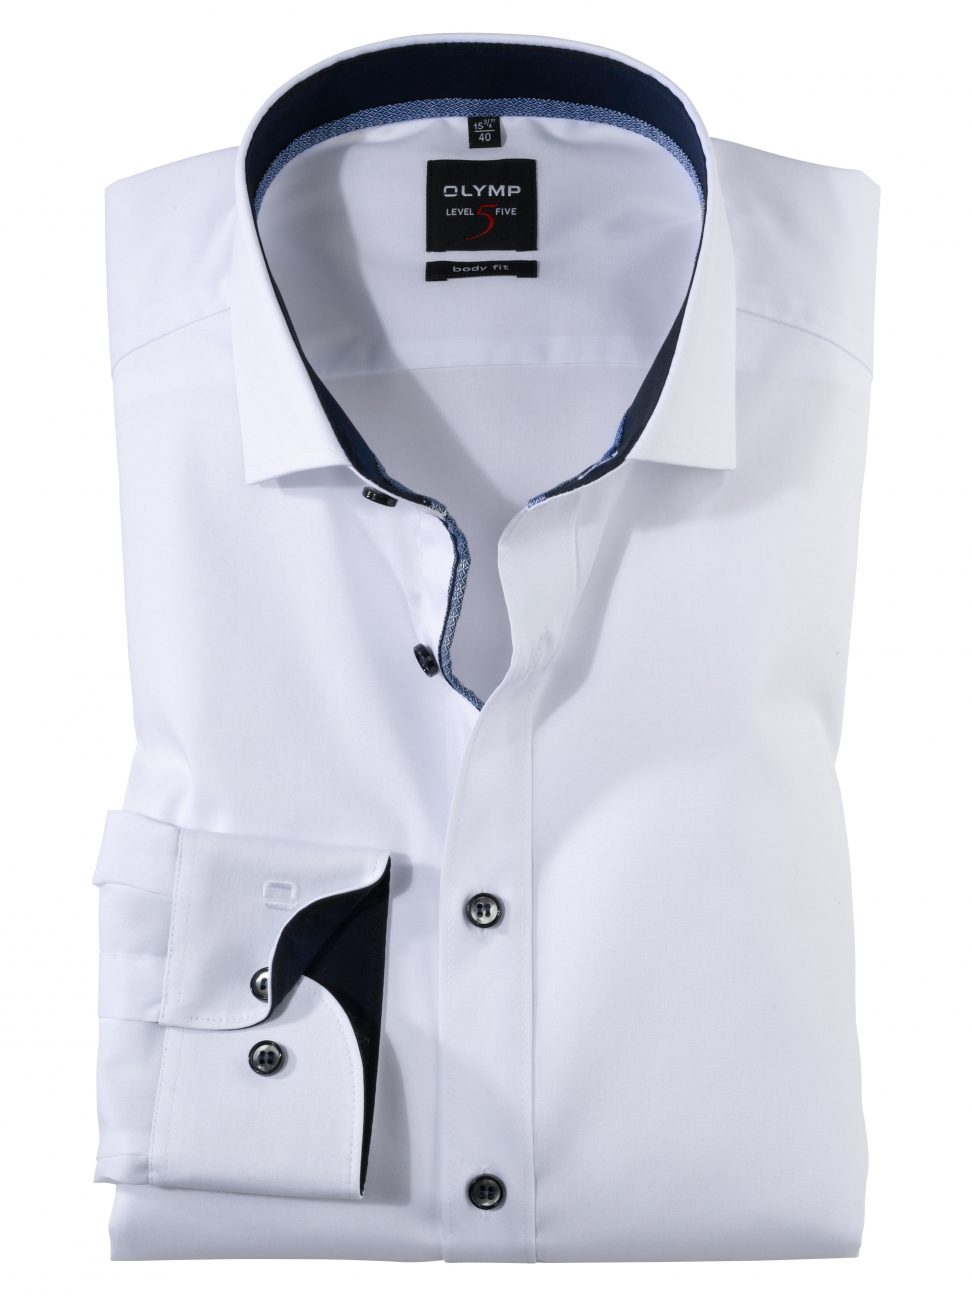 Koszula OLYMP Level Five body fit / biała /Royal Kent / 07676400 skw